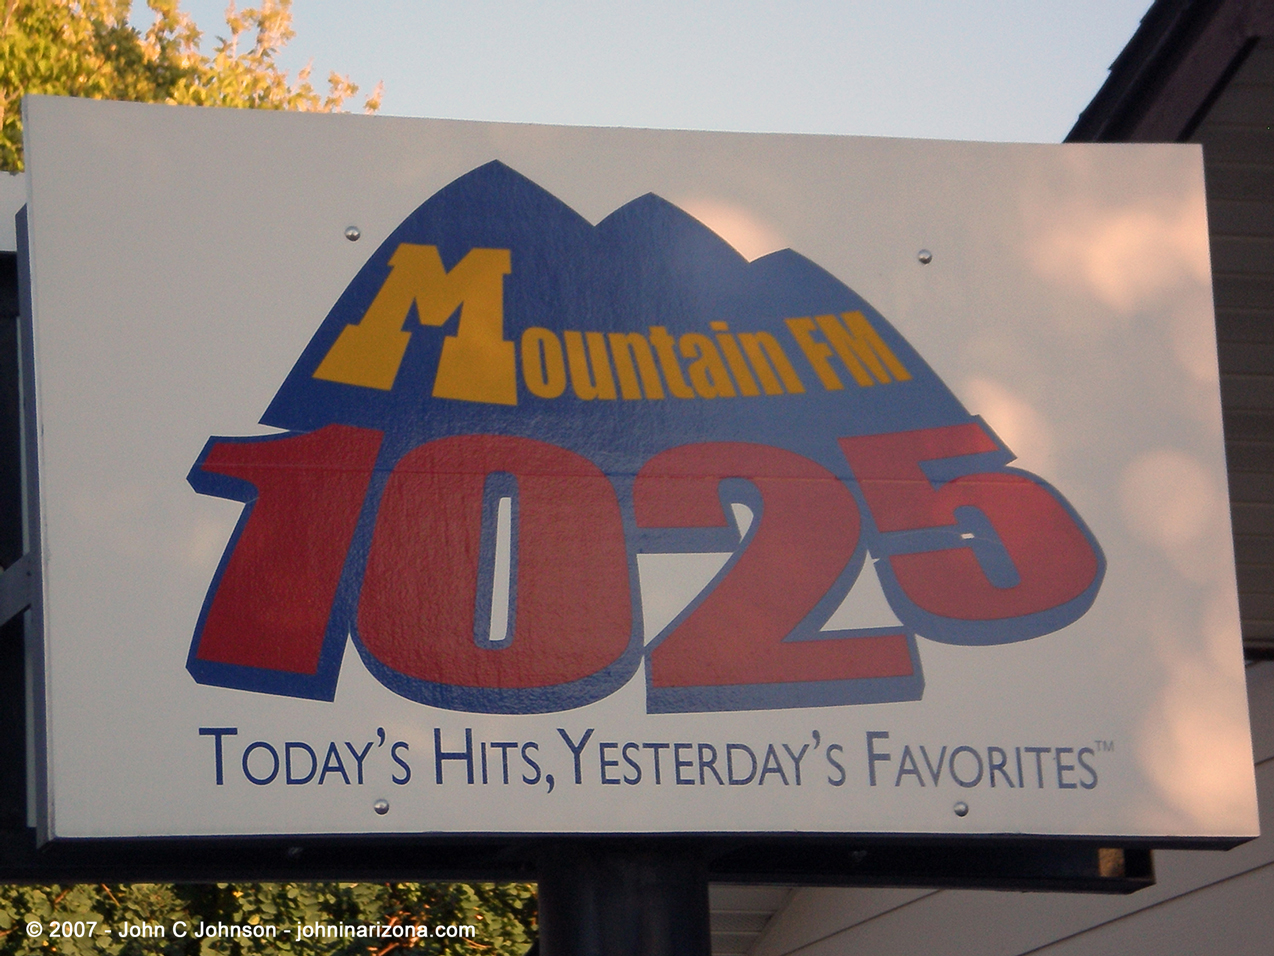 KMSO FM Radio Missoula, Montana